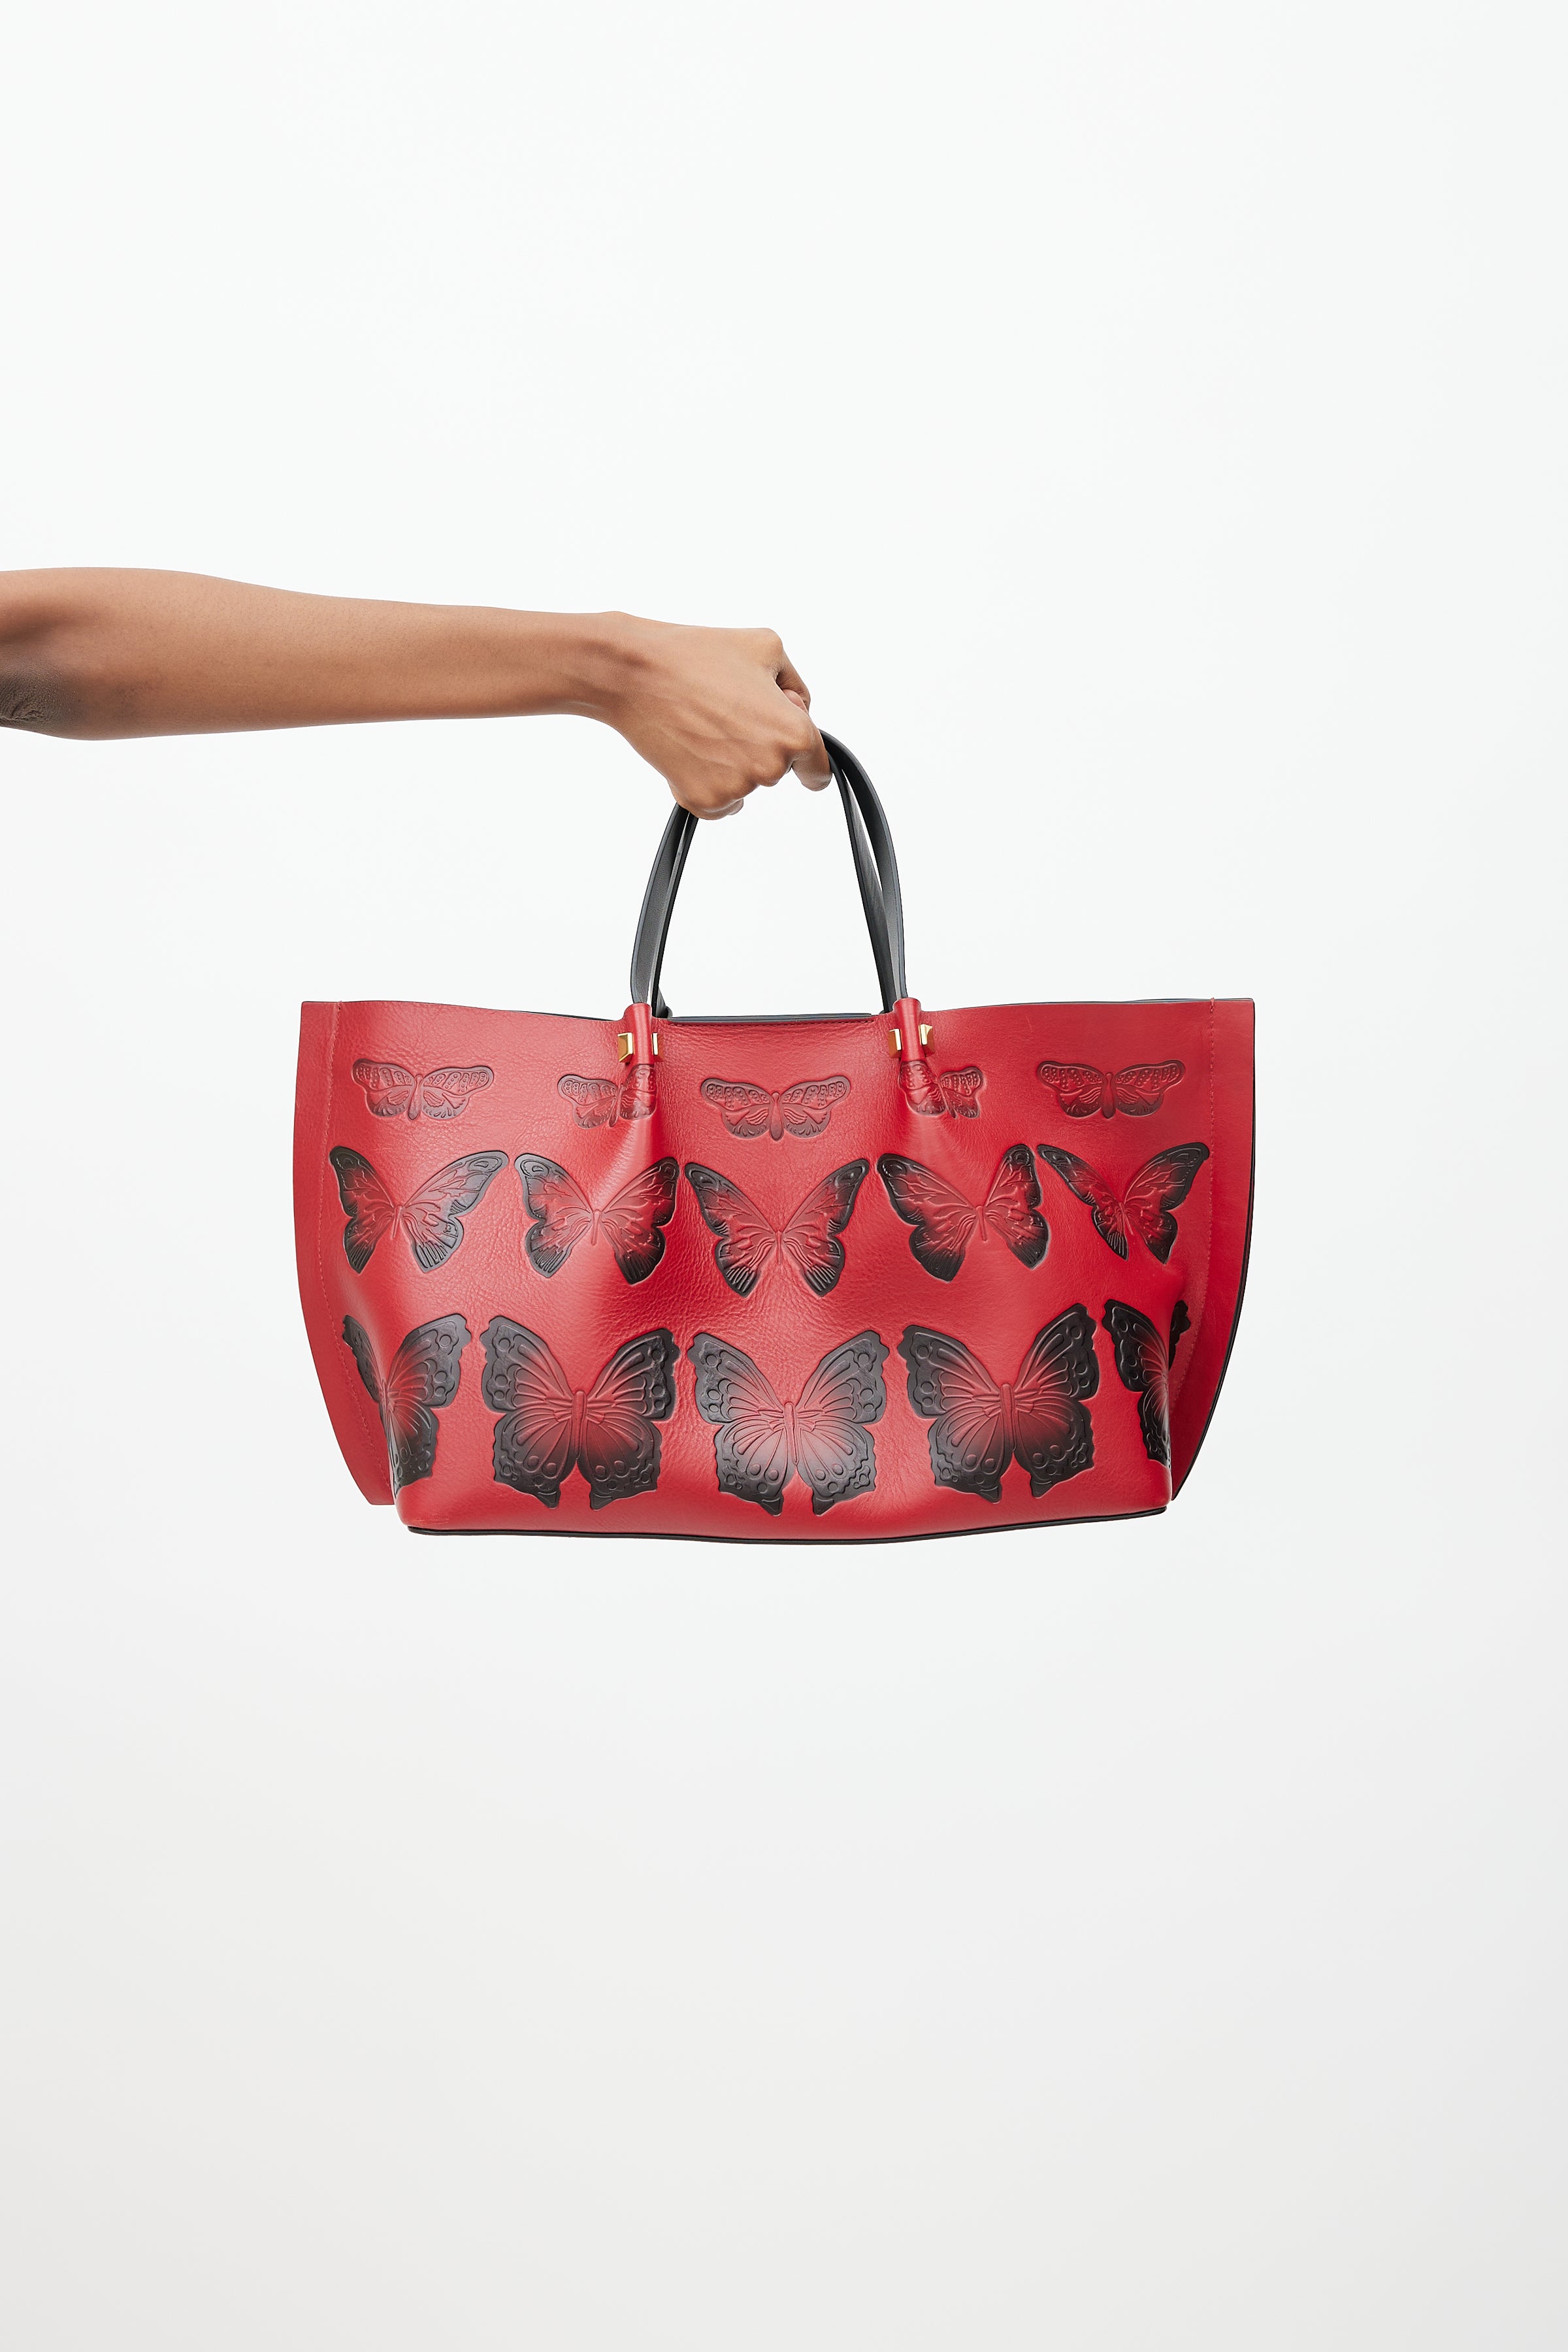 Valentino Garavani V Logo Transparent Tote Bag Red Leather NWT